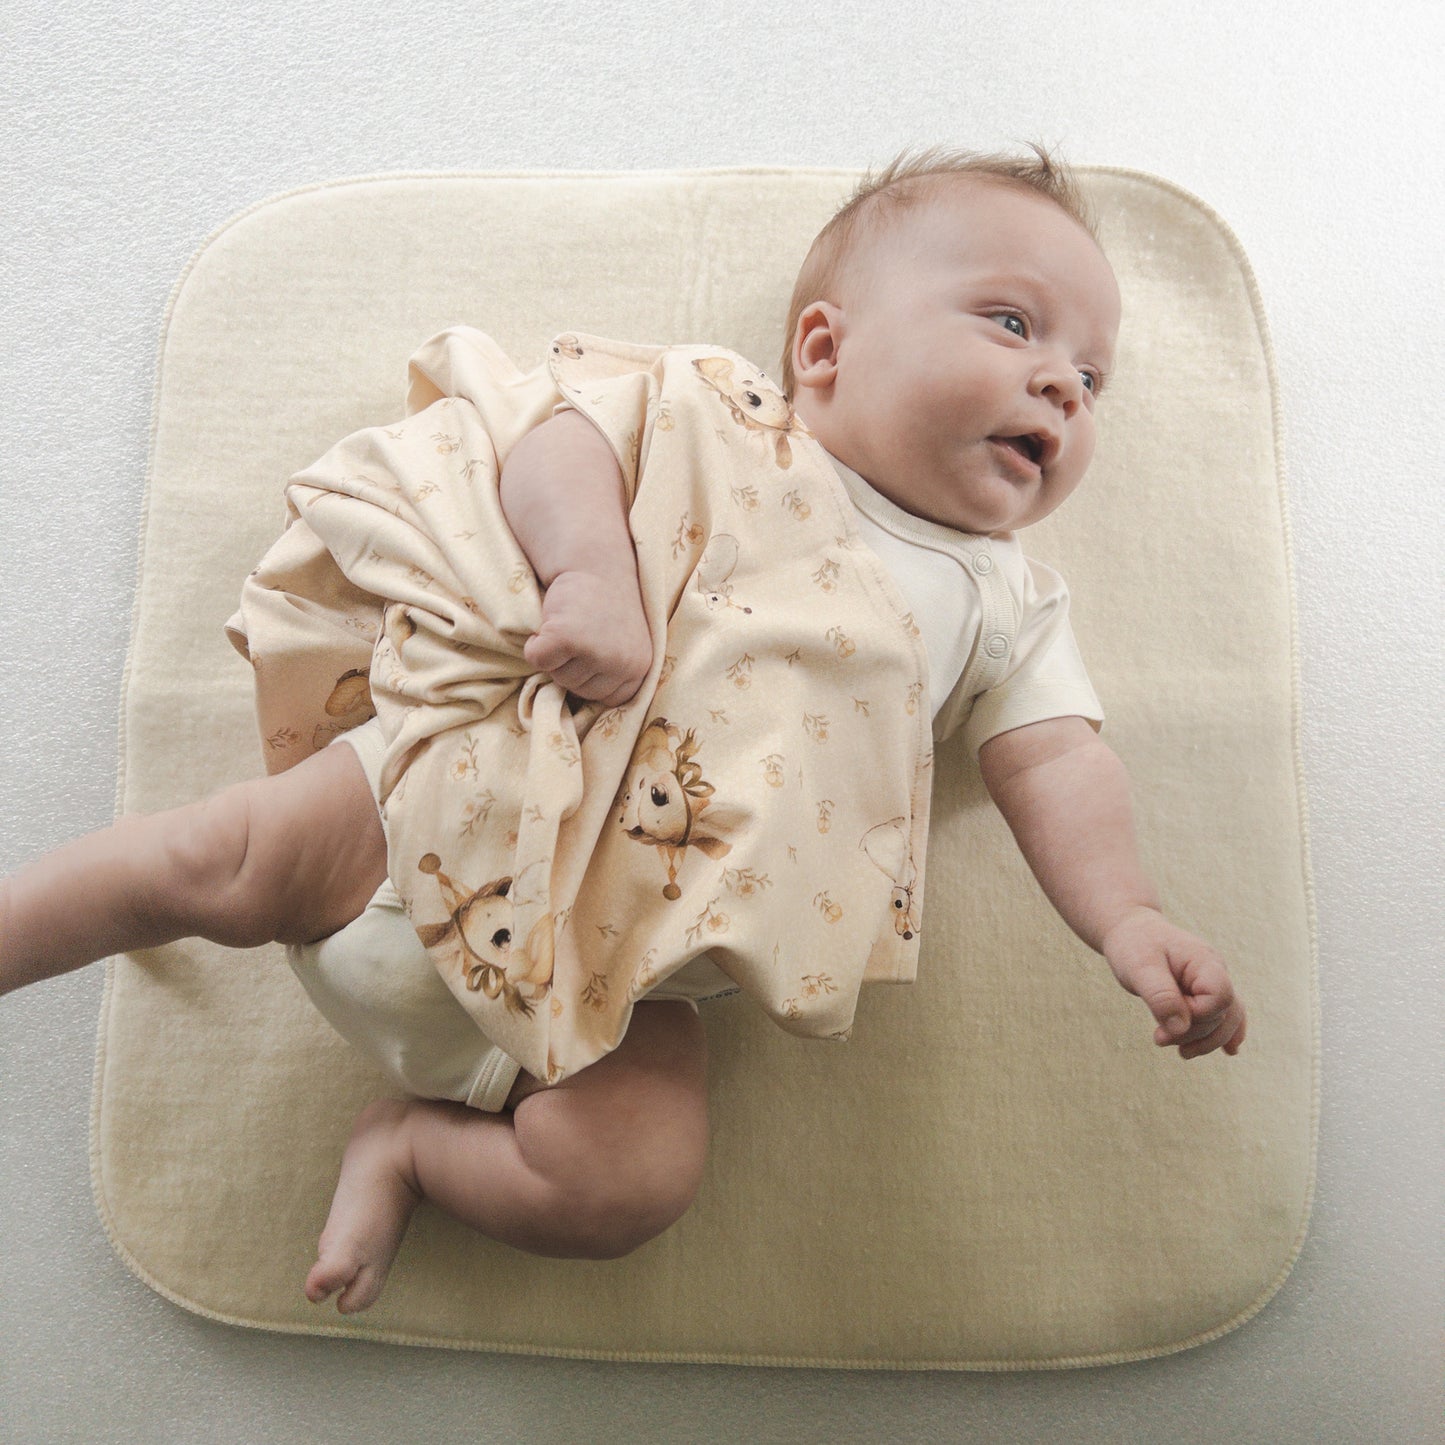 Geggamoja® MRS MIGHETTO "STELLA" Baby Blanket in Soft Bamboo